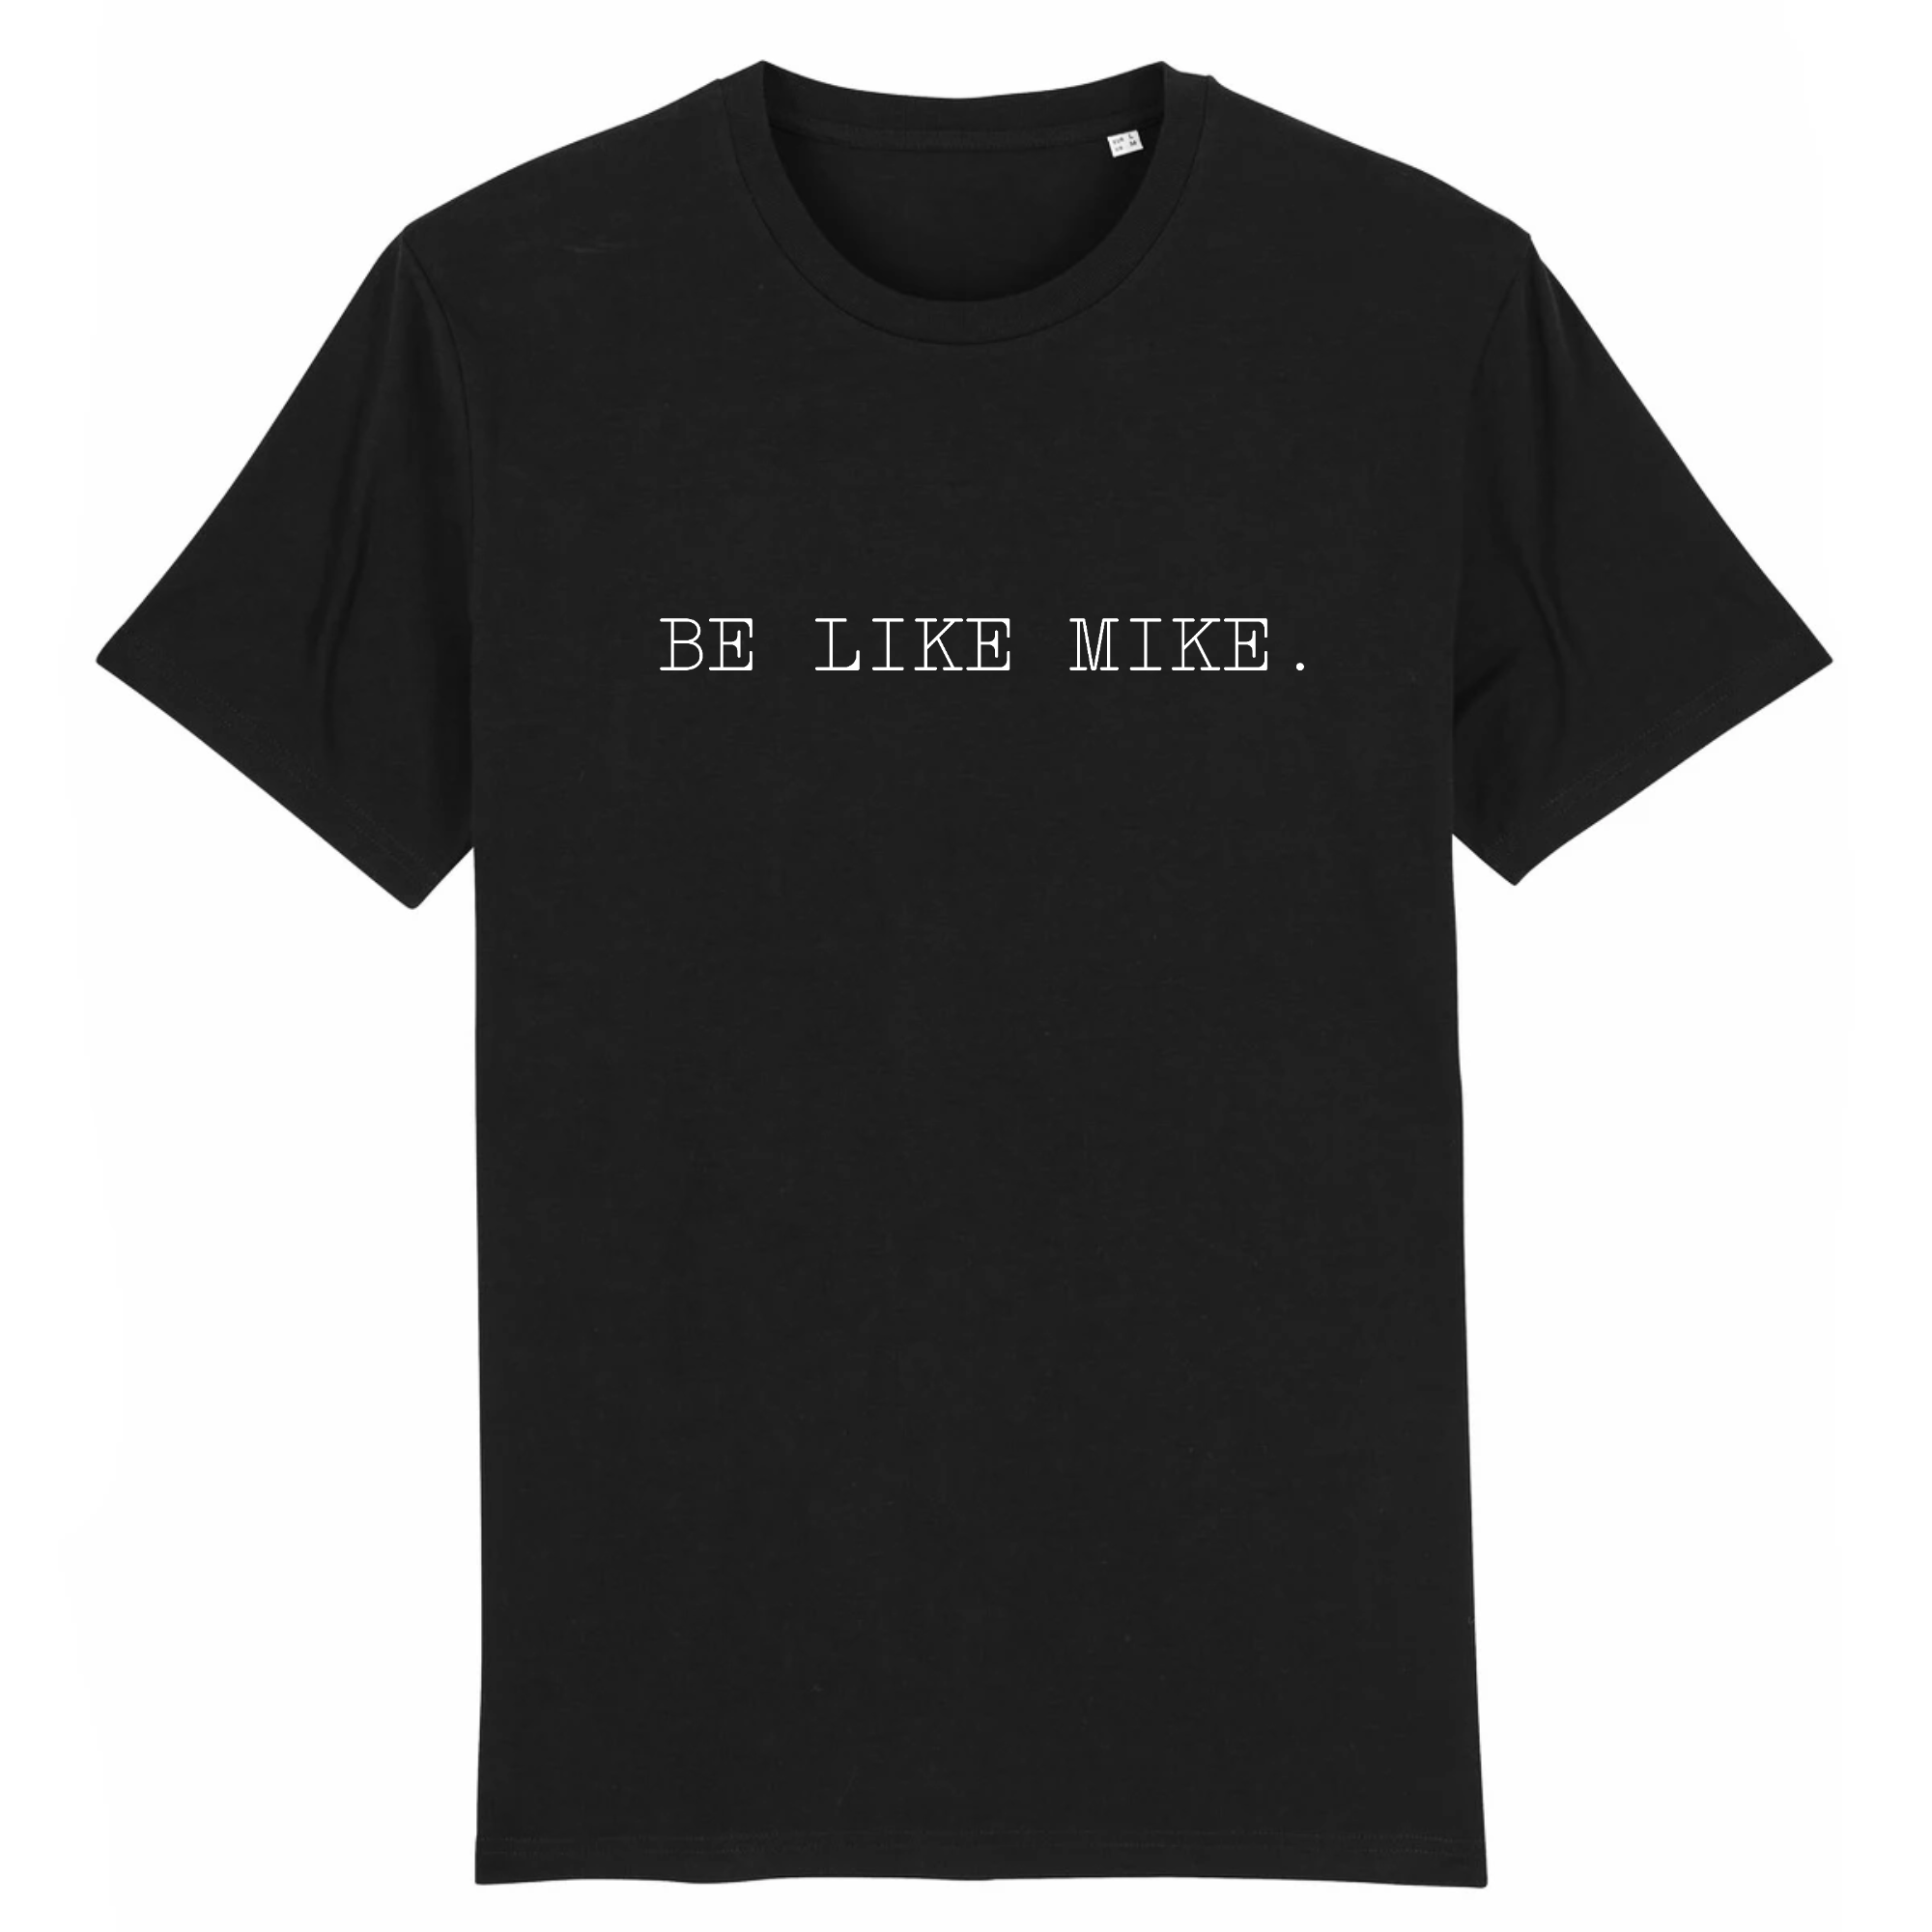 ceci est un tshirt noir avec le slogan de michael jordan be like mike de la pub gatorade